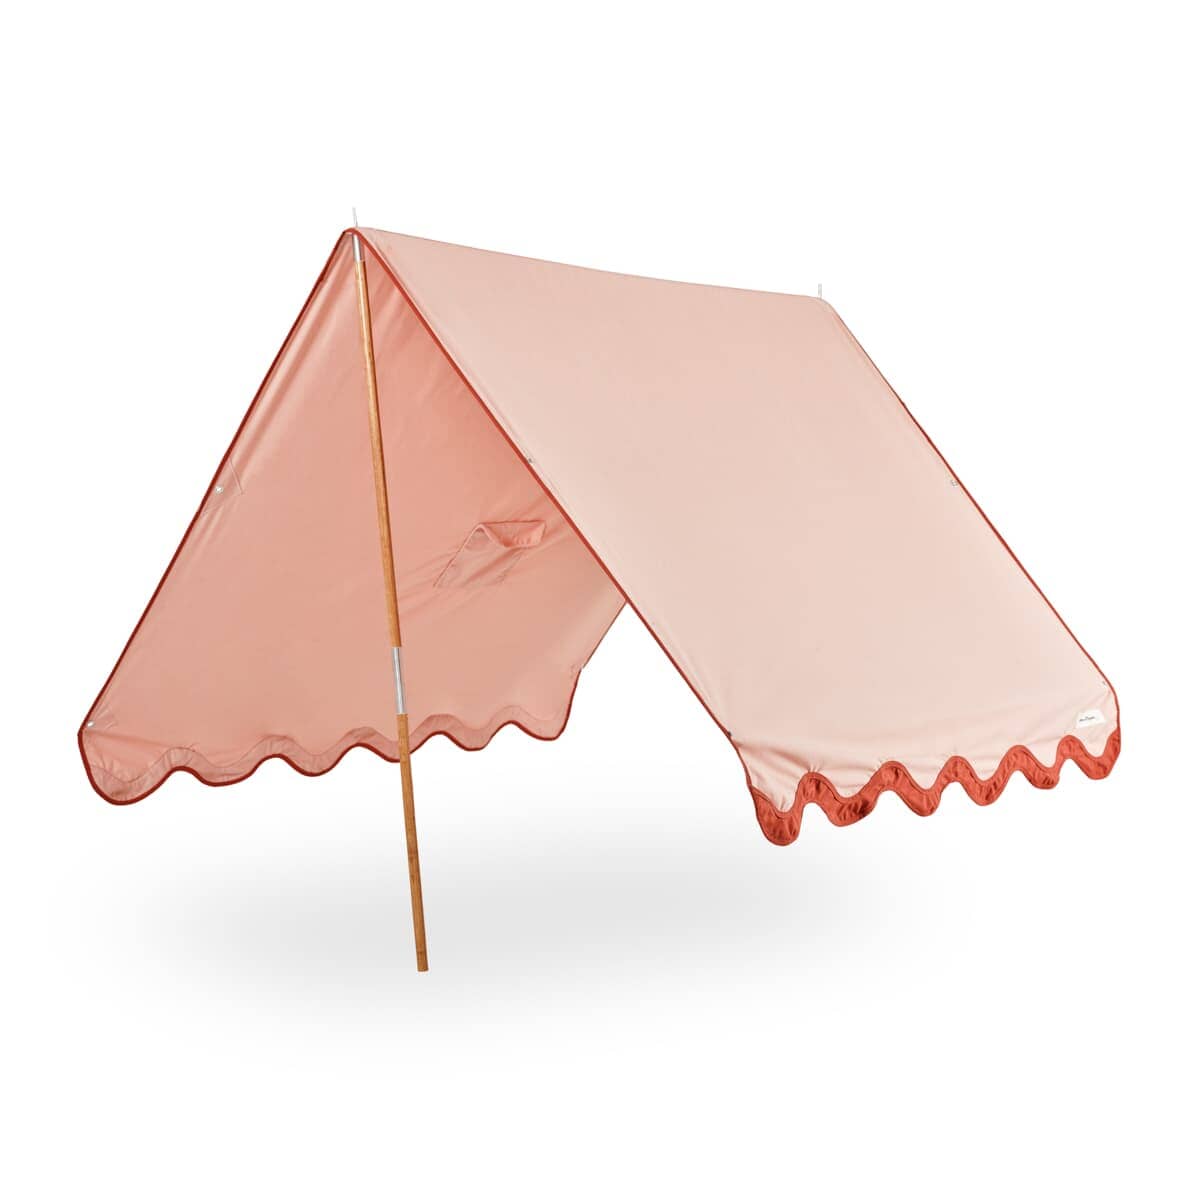 Studio image of riviera pink tent